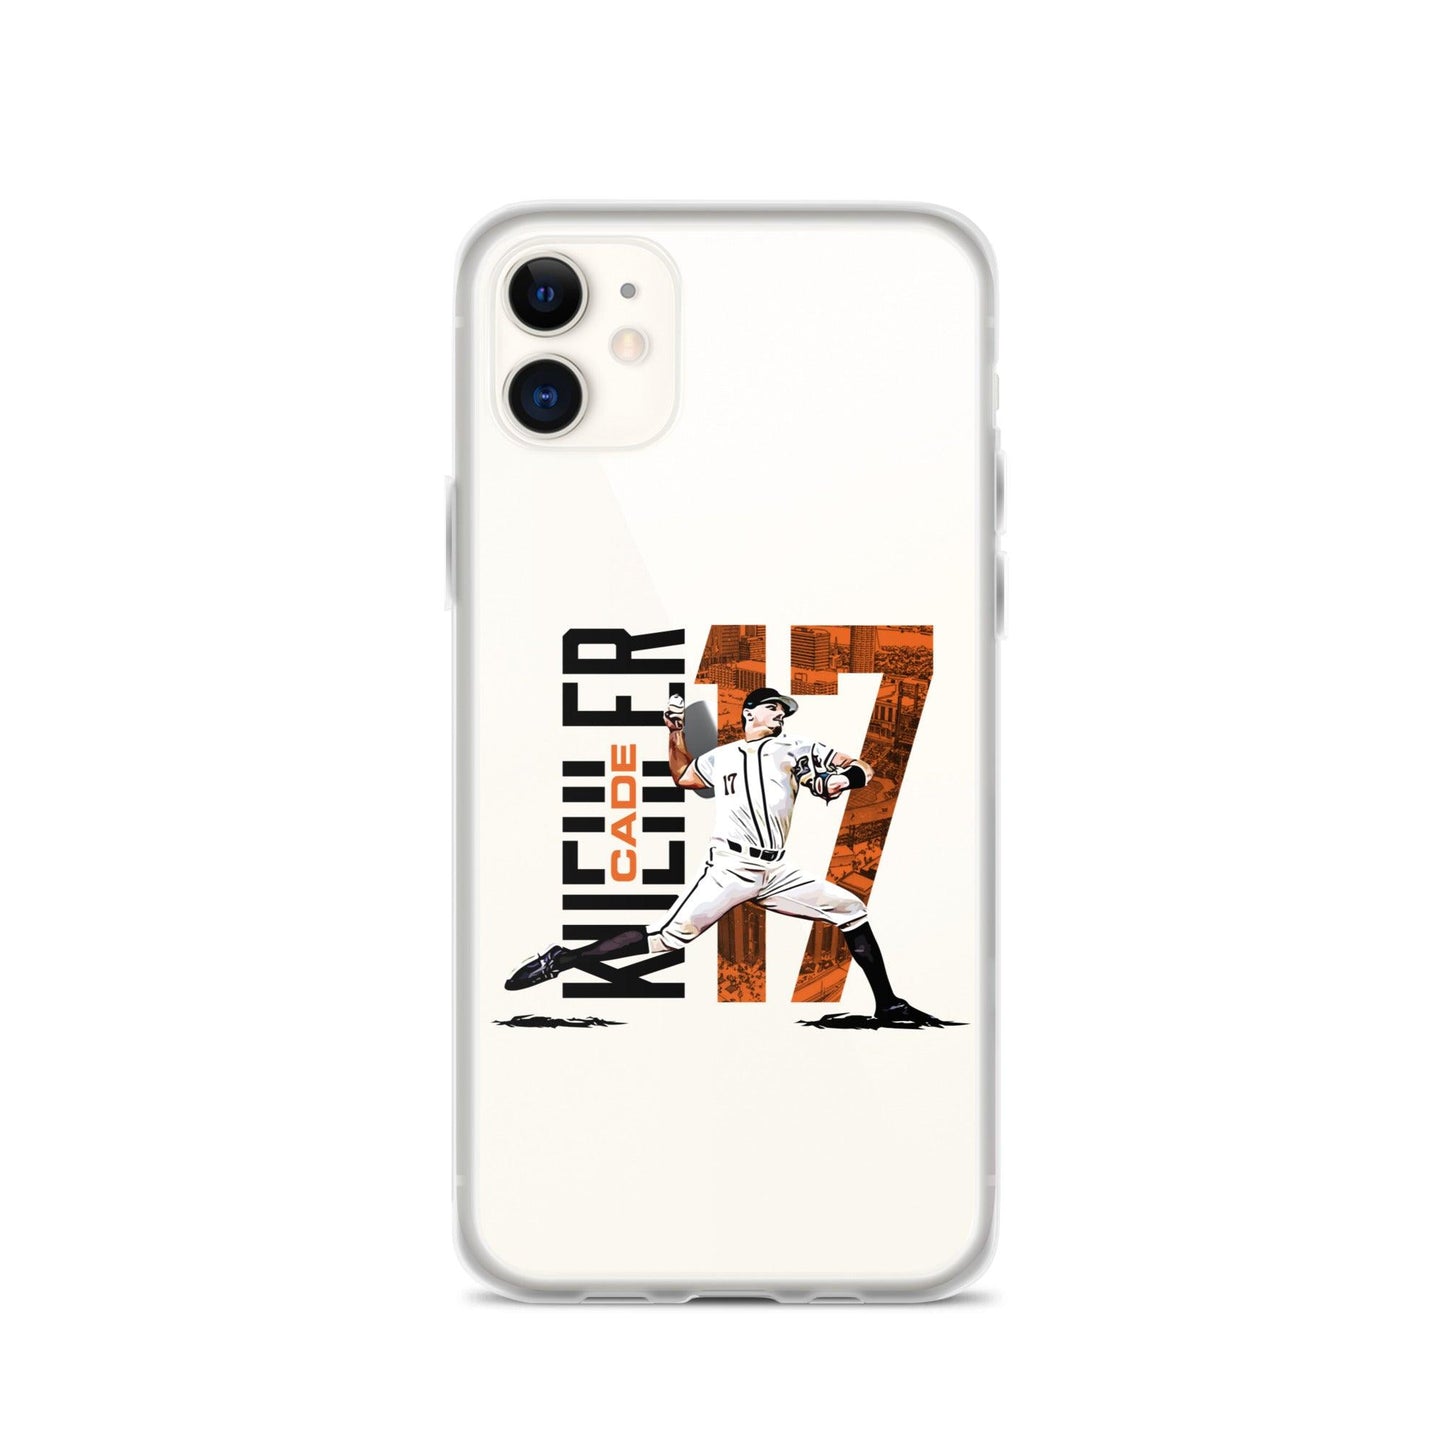 Cade Kuehler “Essential” iPhone Case - Fan Arch